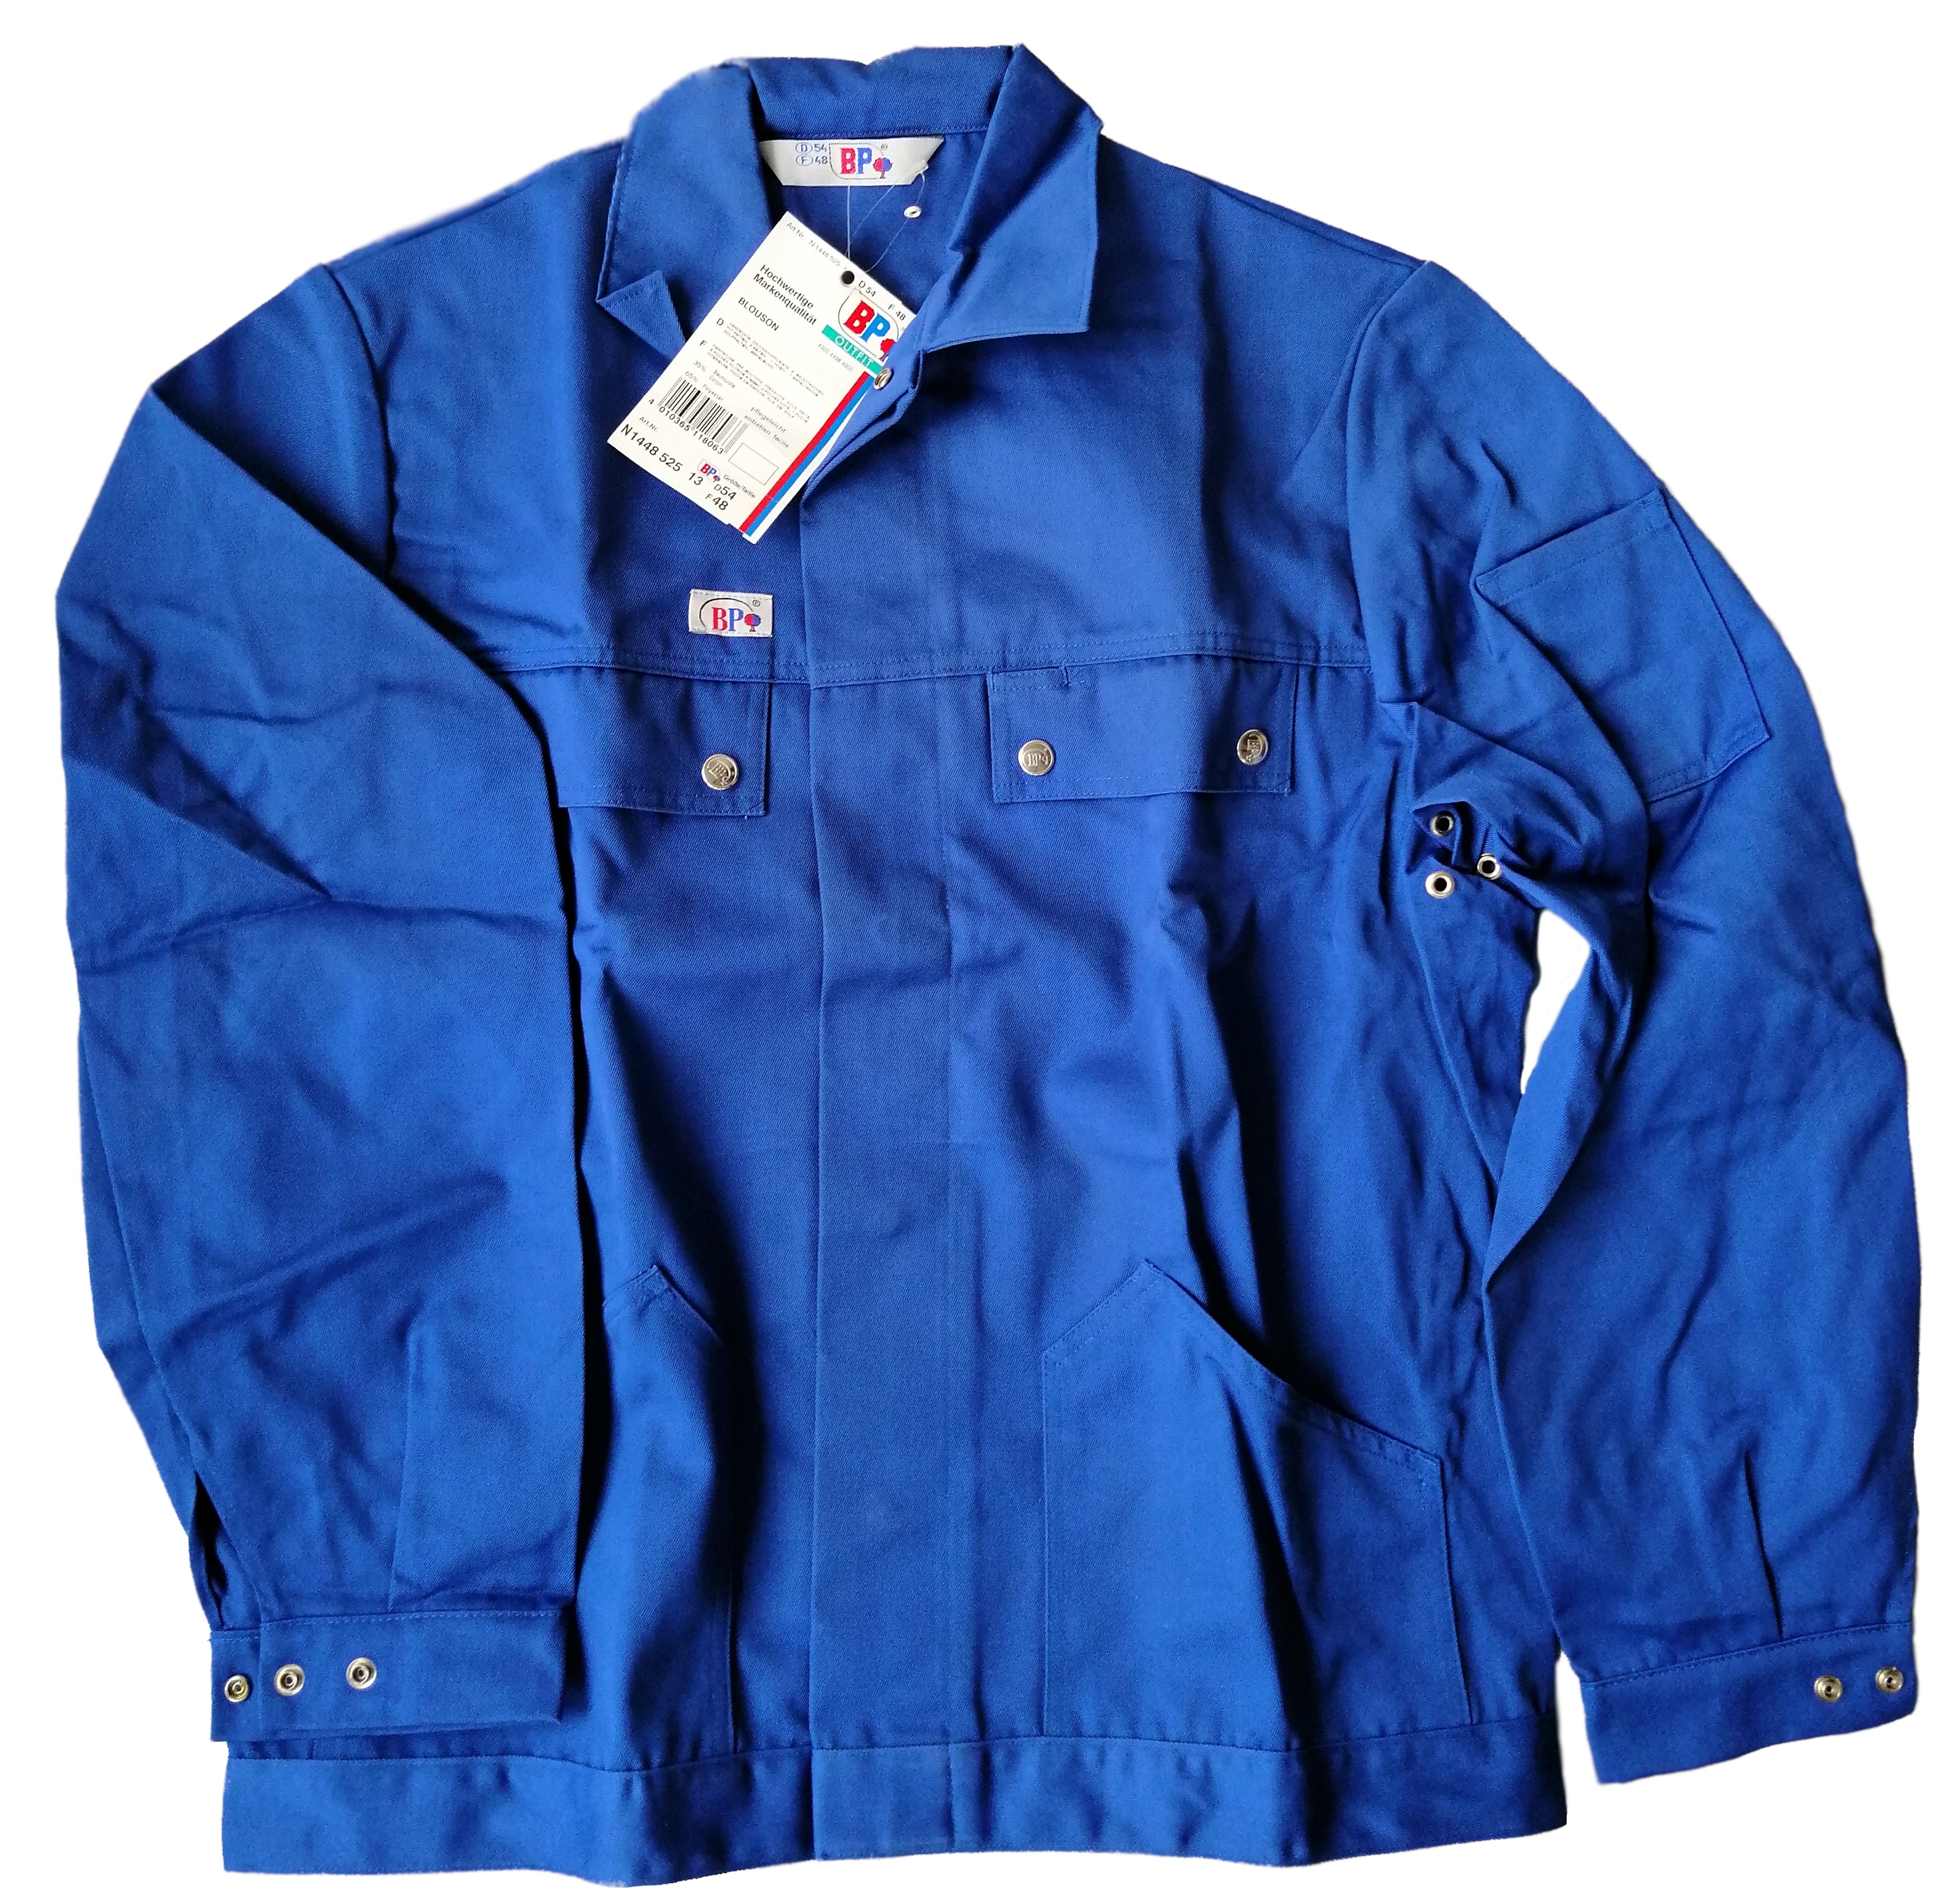 BP Blouson Jacke Arbeitsjacke Bundjacke Berufsjacke Arbeitskleidung Berufskleidung kornblau